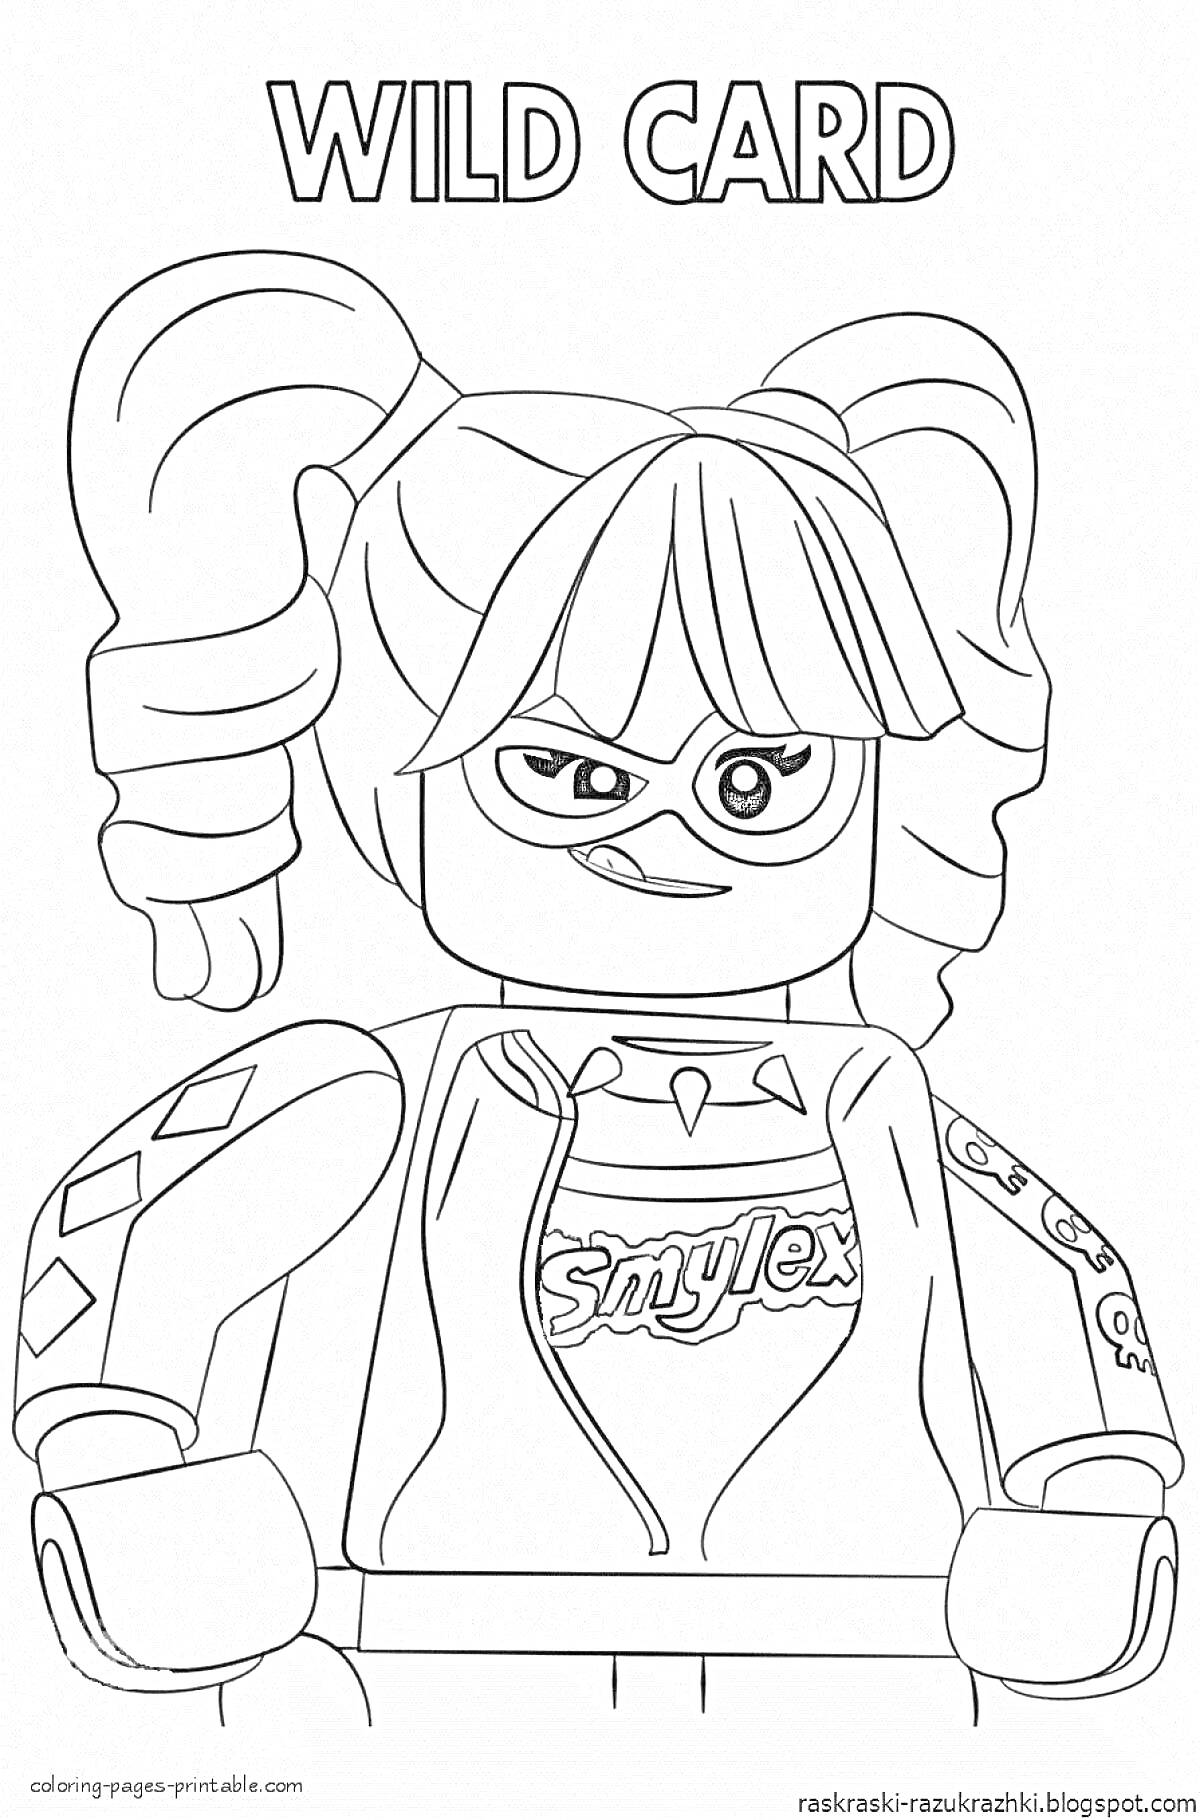 Раскраска персонаж в стиле Lego с двумя хвостиками, надпись 